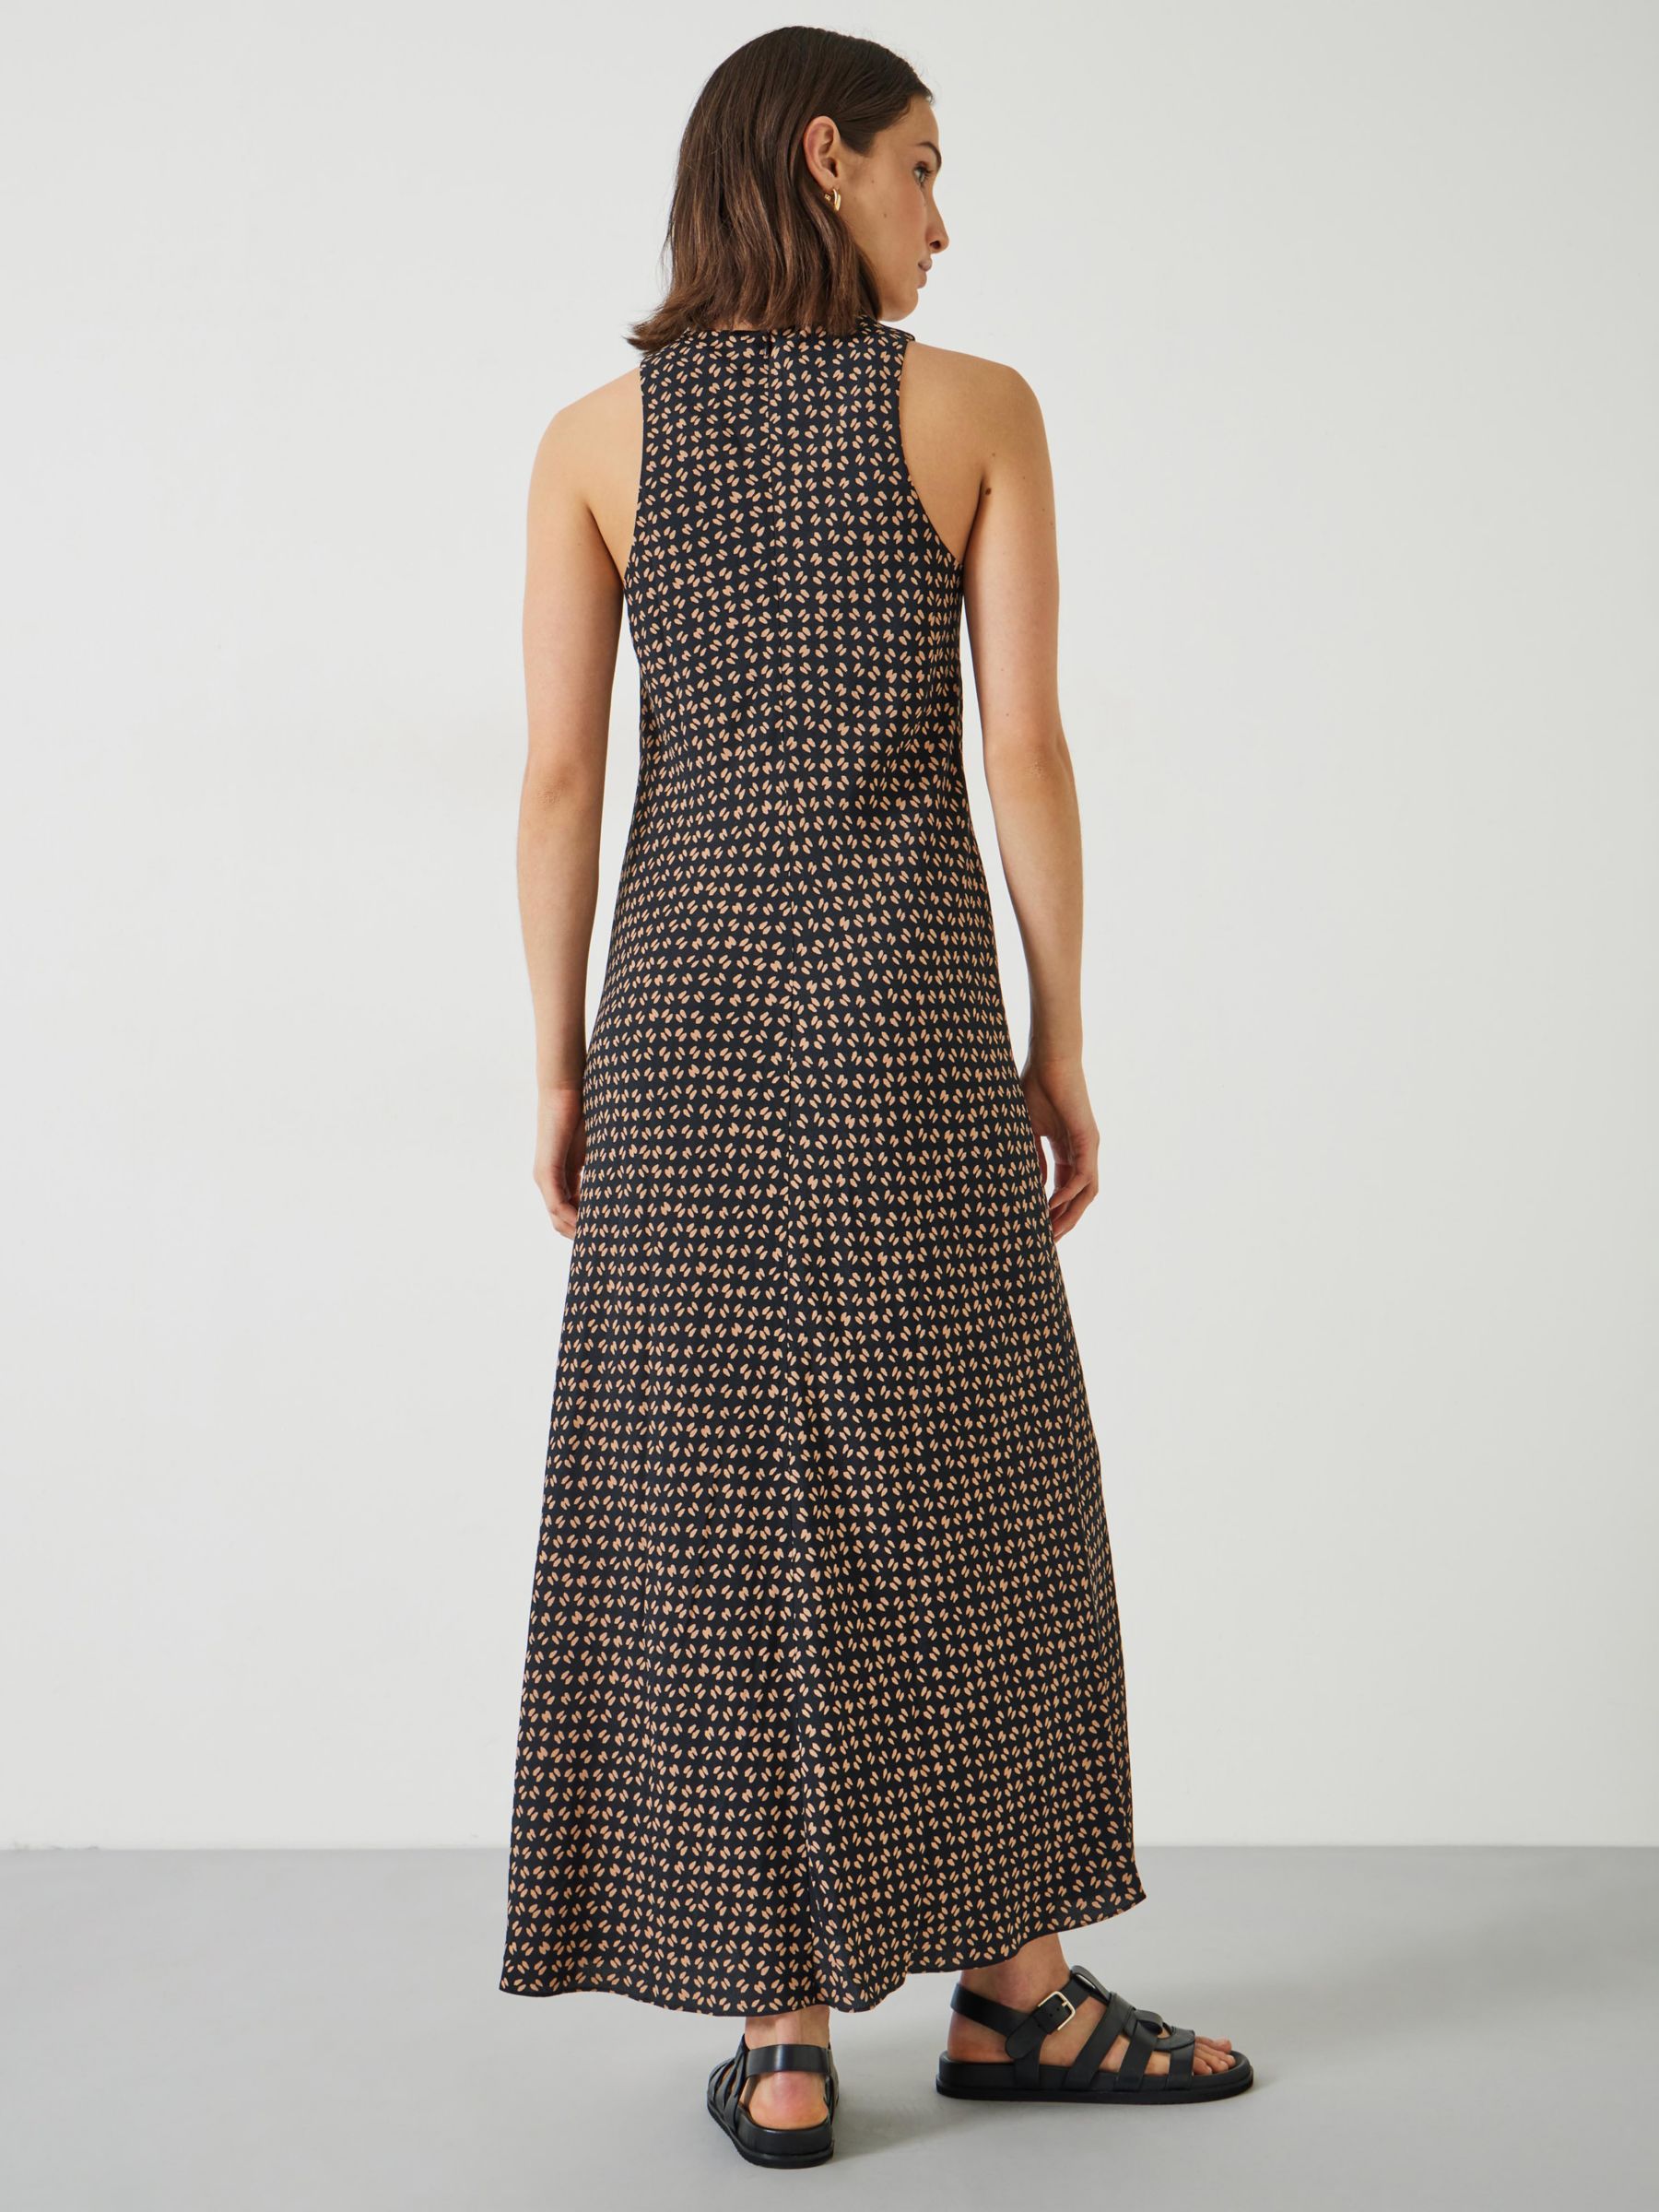 HUSH Imani Contrast Geometric Print Maxi Dress, Brown, 14